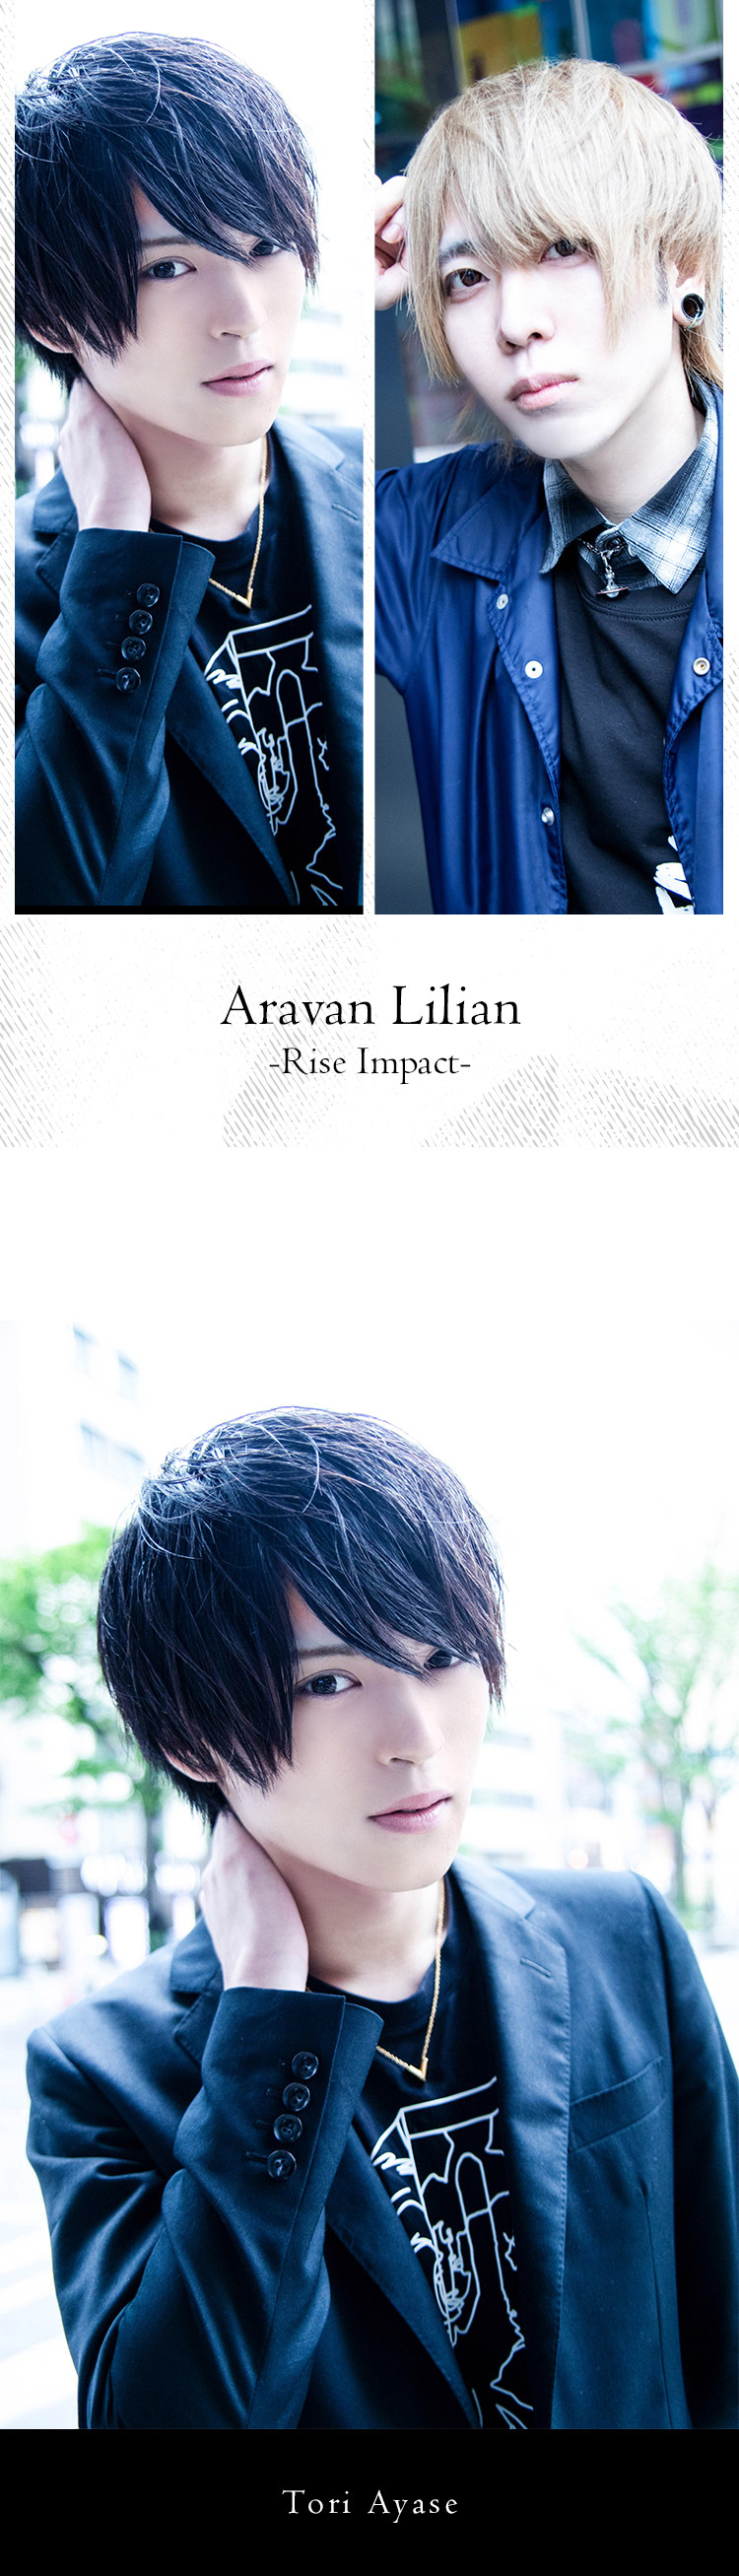 「Aravan Lilian -Rise Impact-」から痺れるイケメンの出演です!!